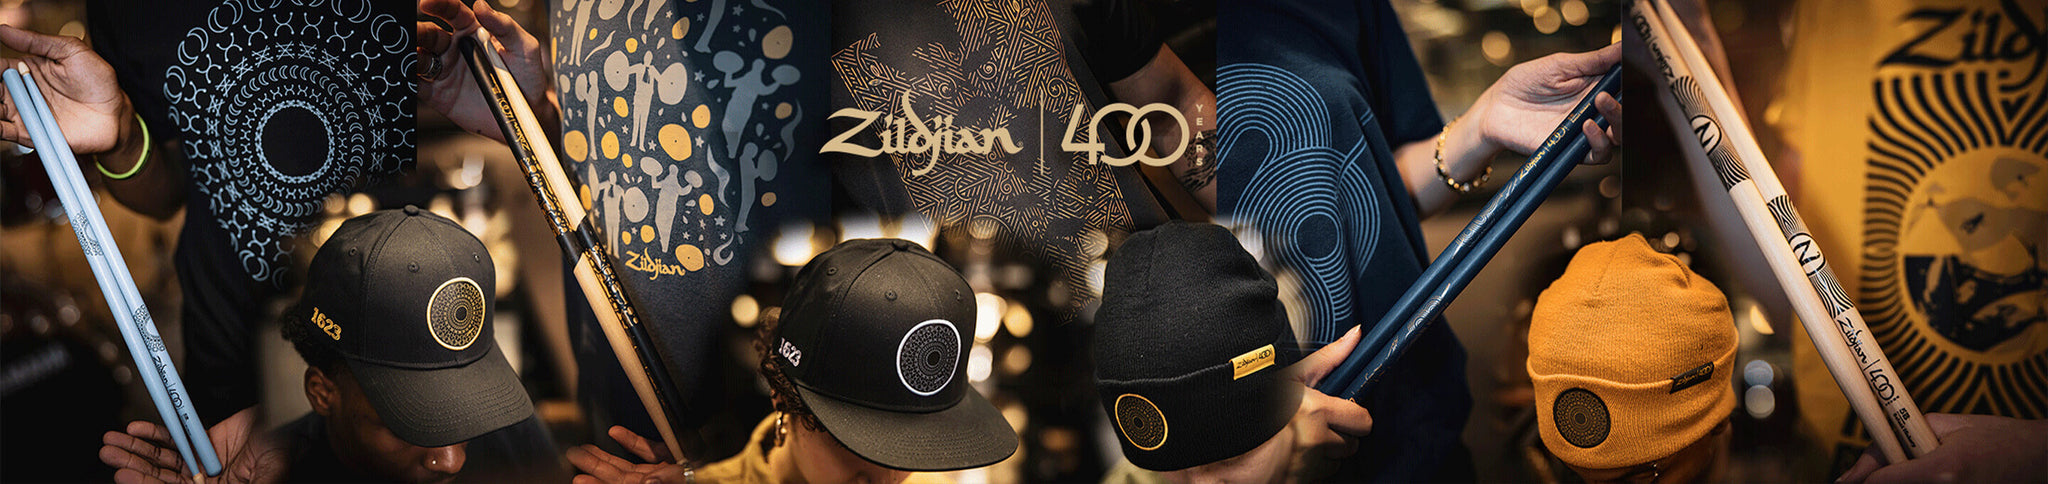 Zildjian Category/Gear/Apparel & Lifestyle/400th Anniversary Apparel